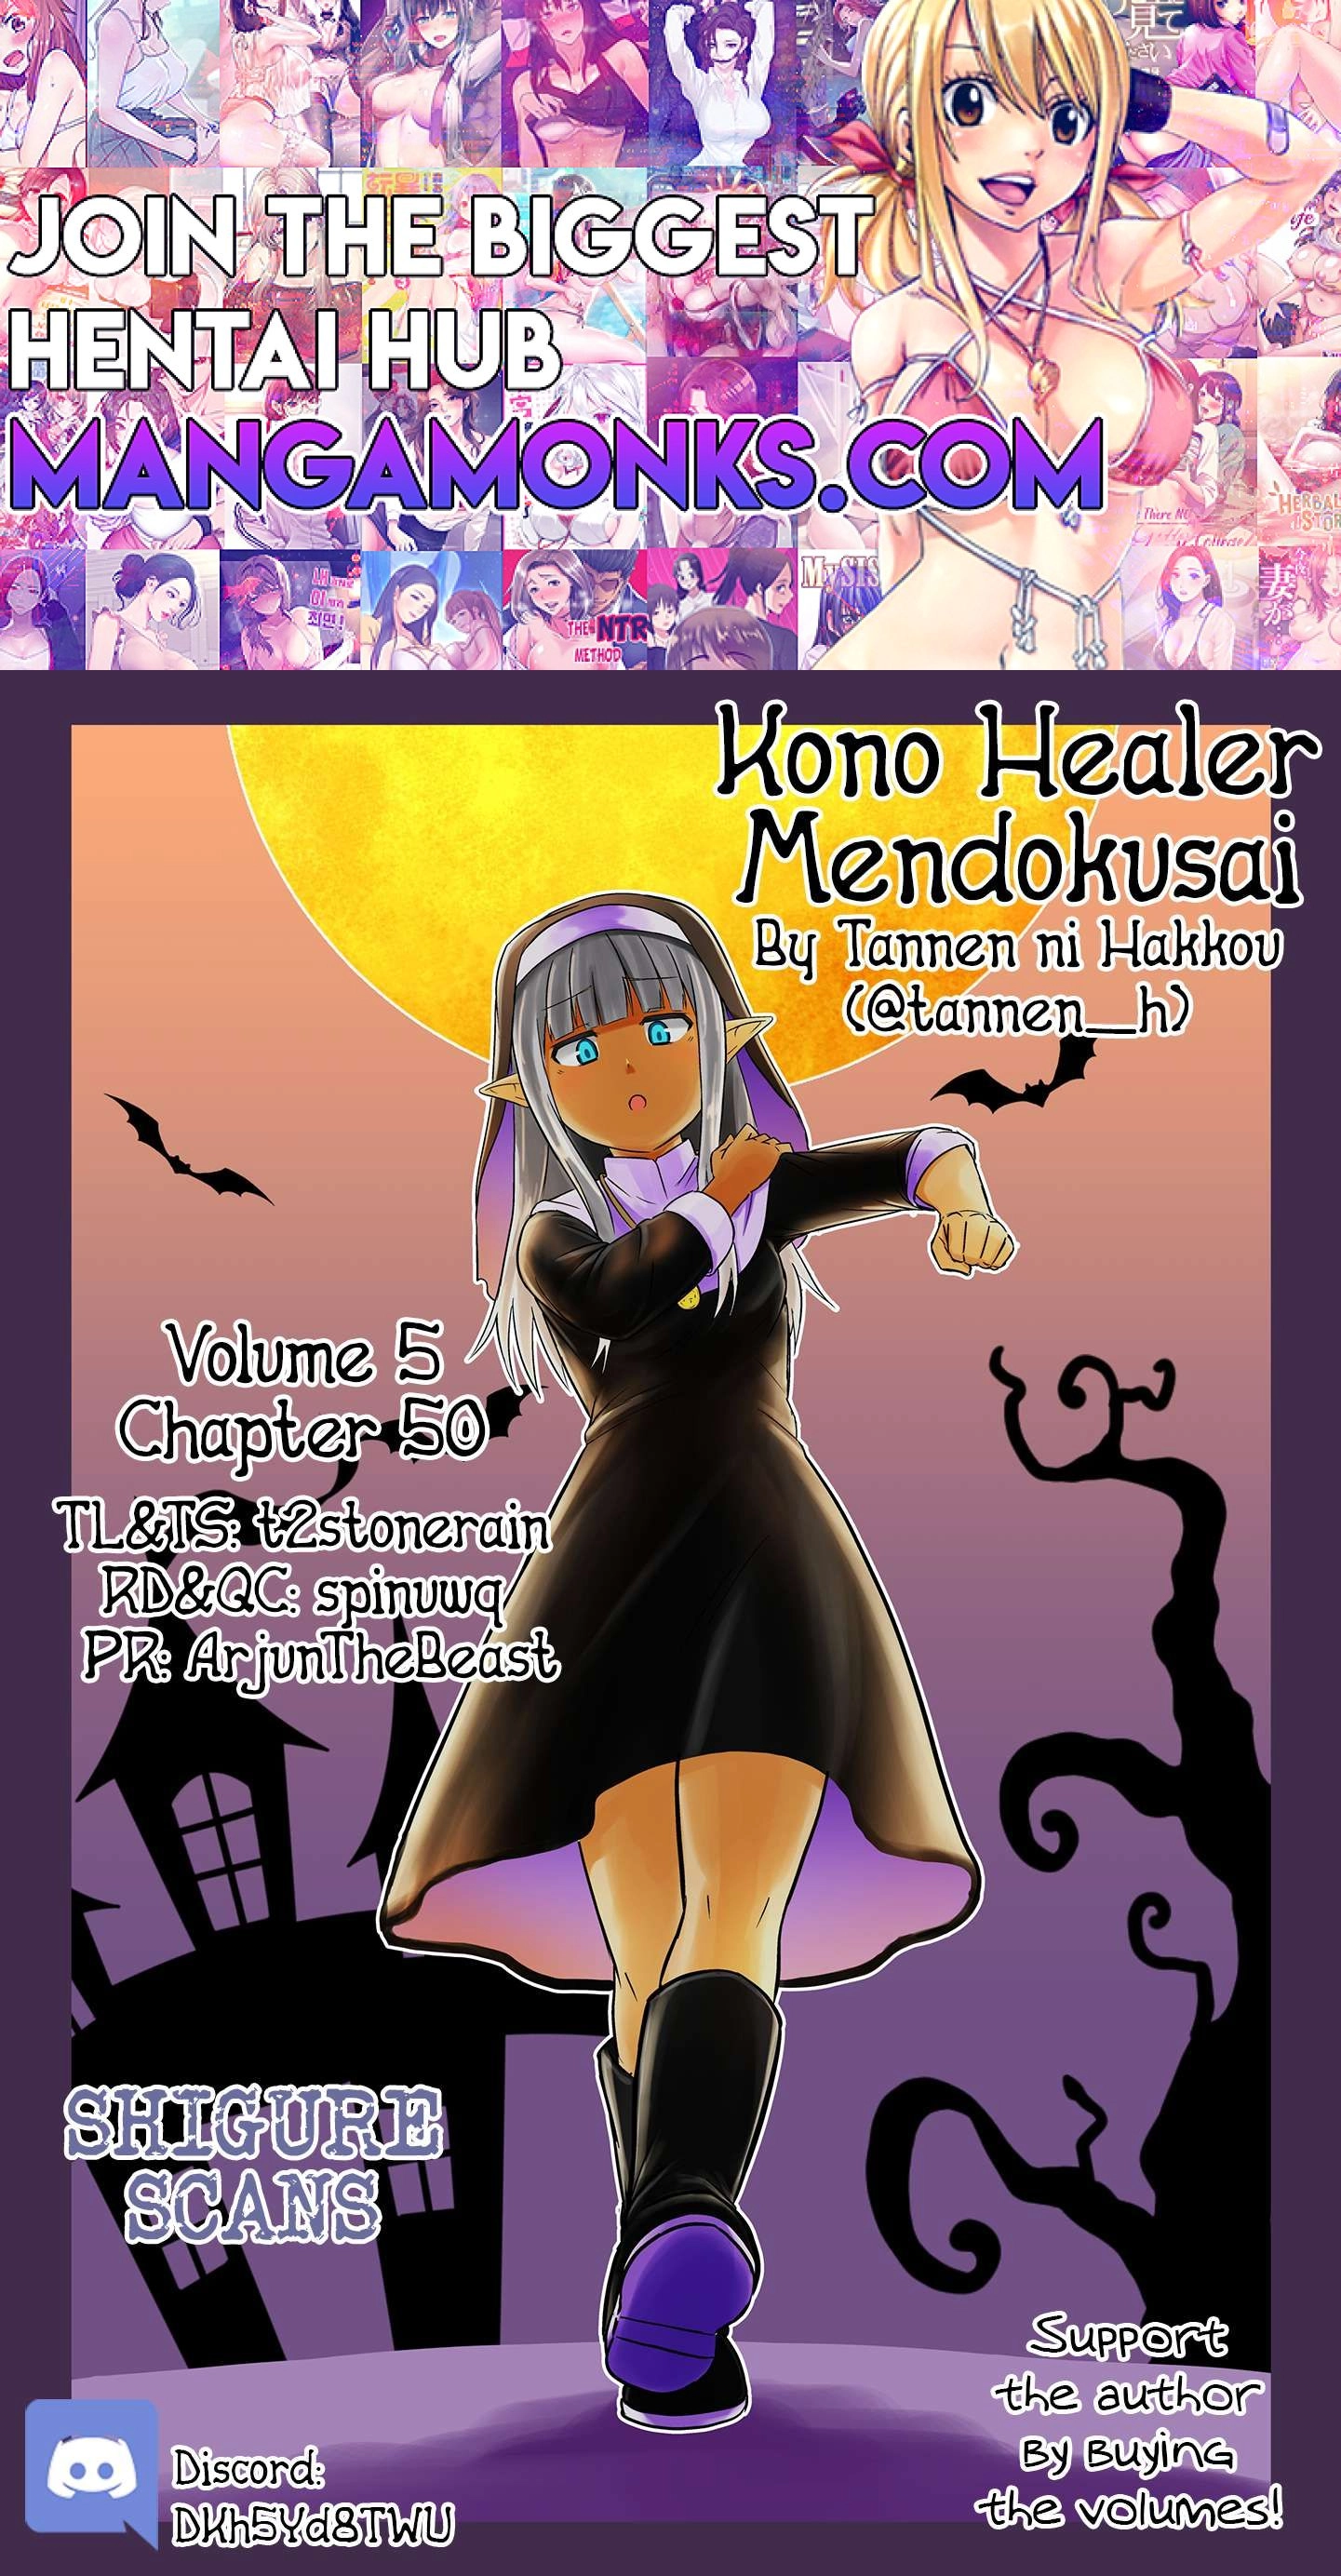 Kono Healer Mendokusai Chapter 50 1